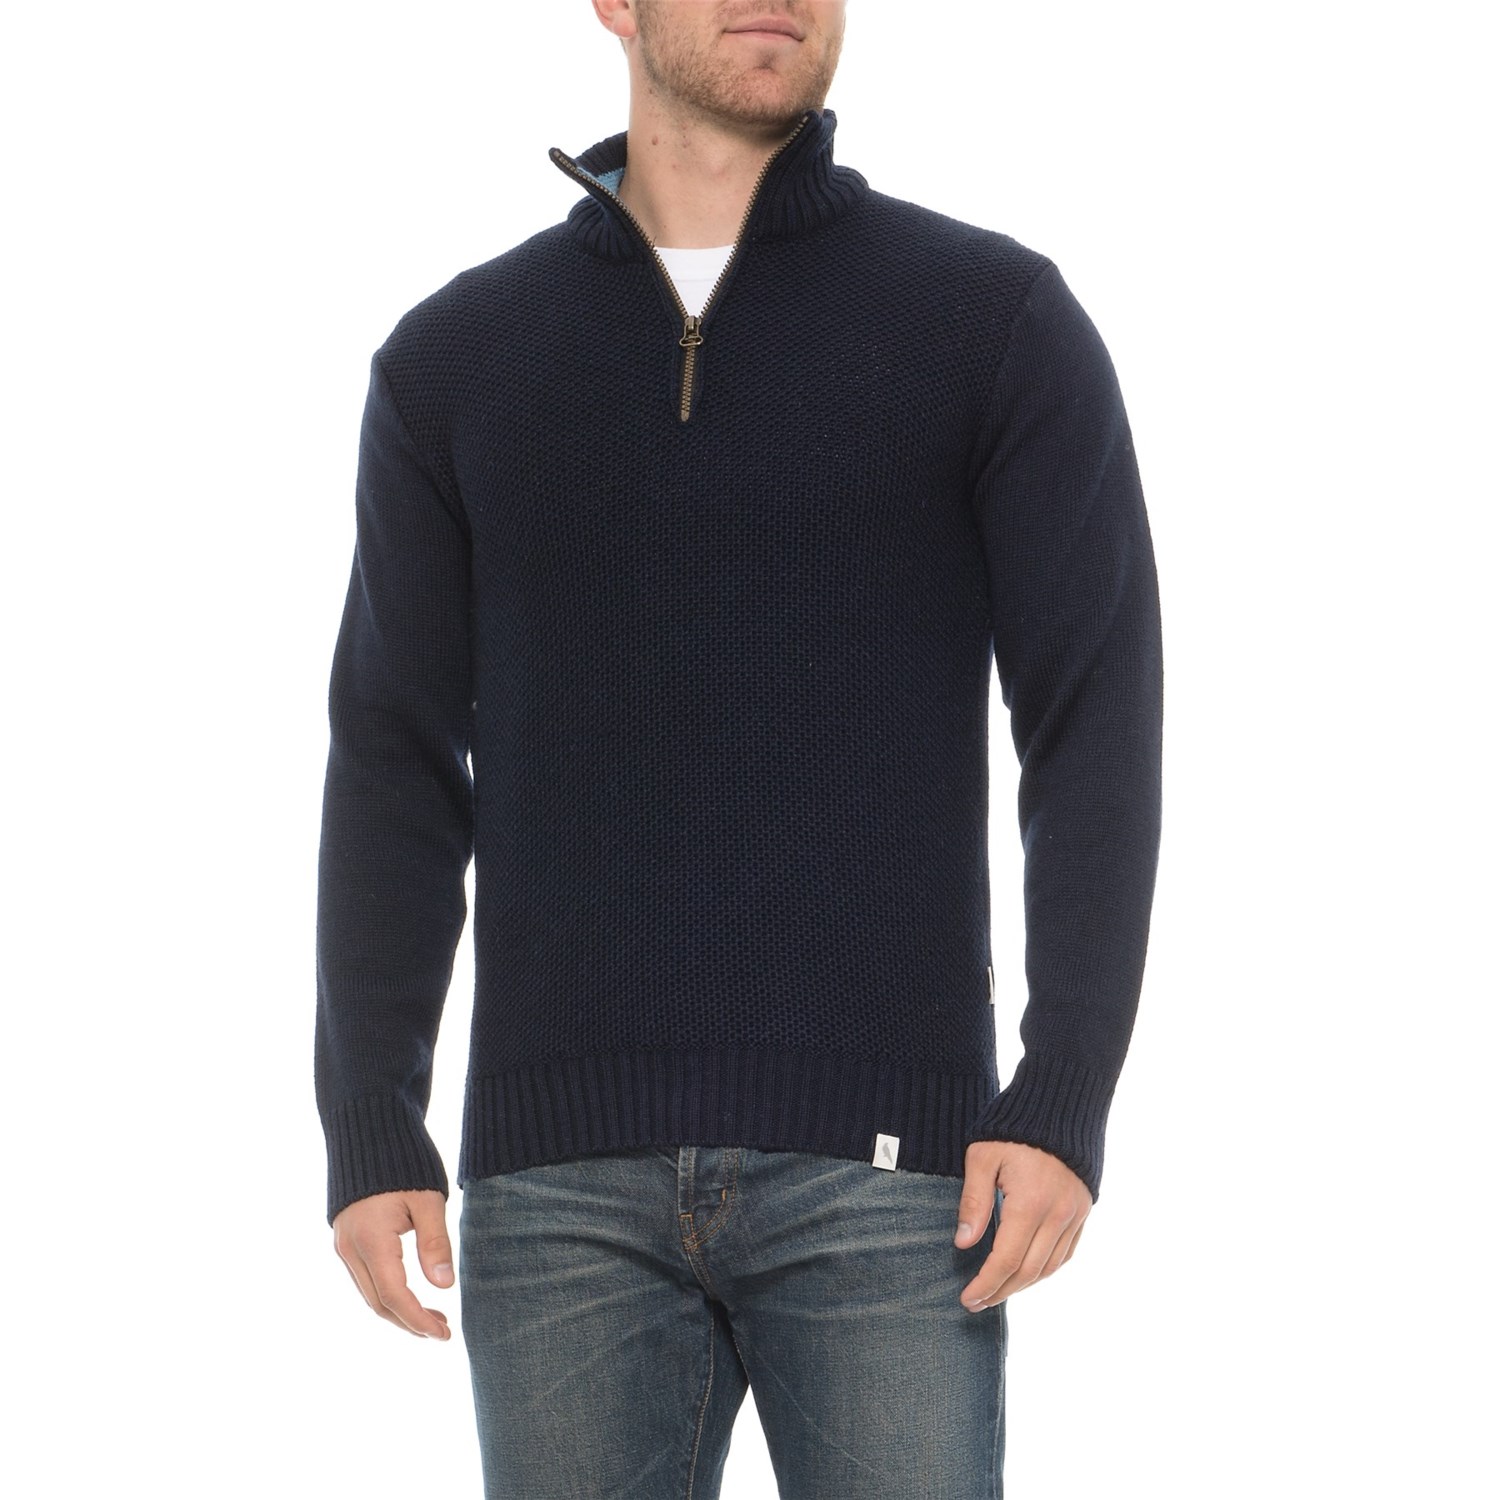 J.G. Glover & CO. Bailey Jumper Sweater – Merino Wool, Zip-Neck (For Men)